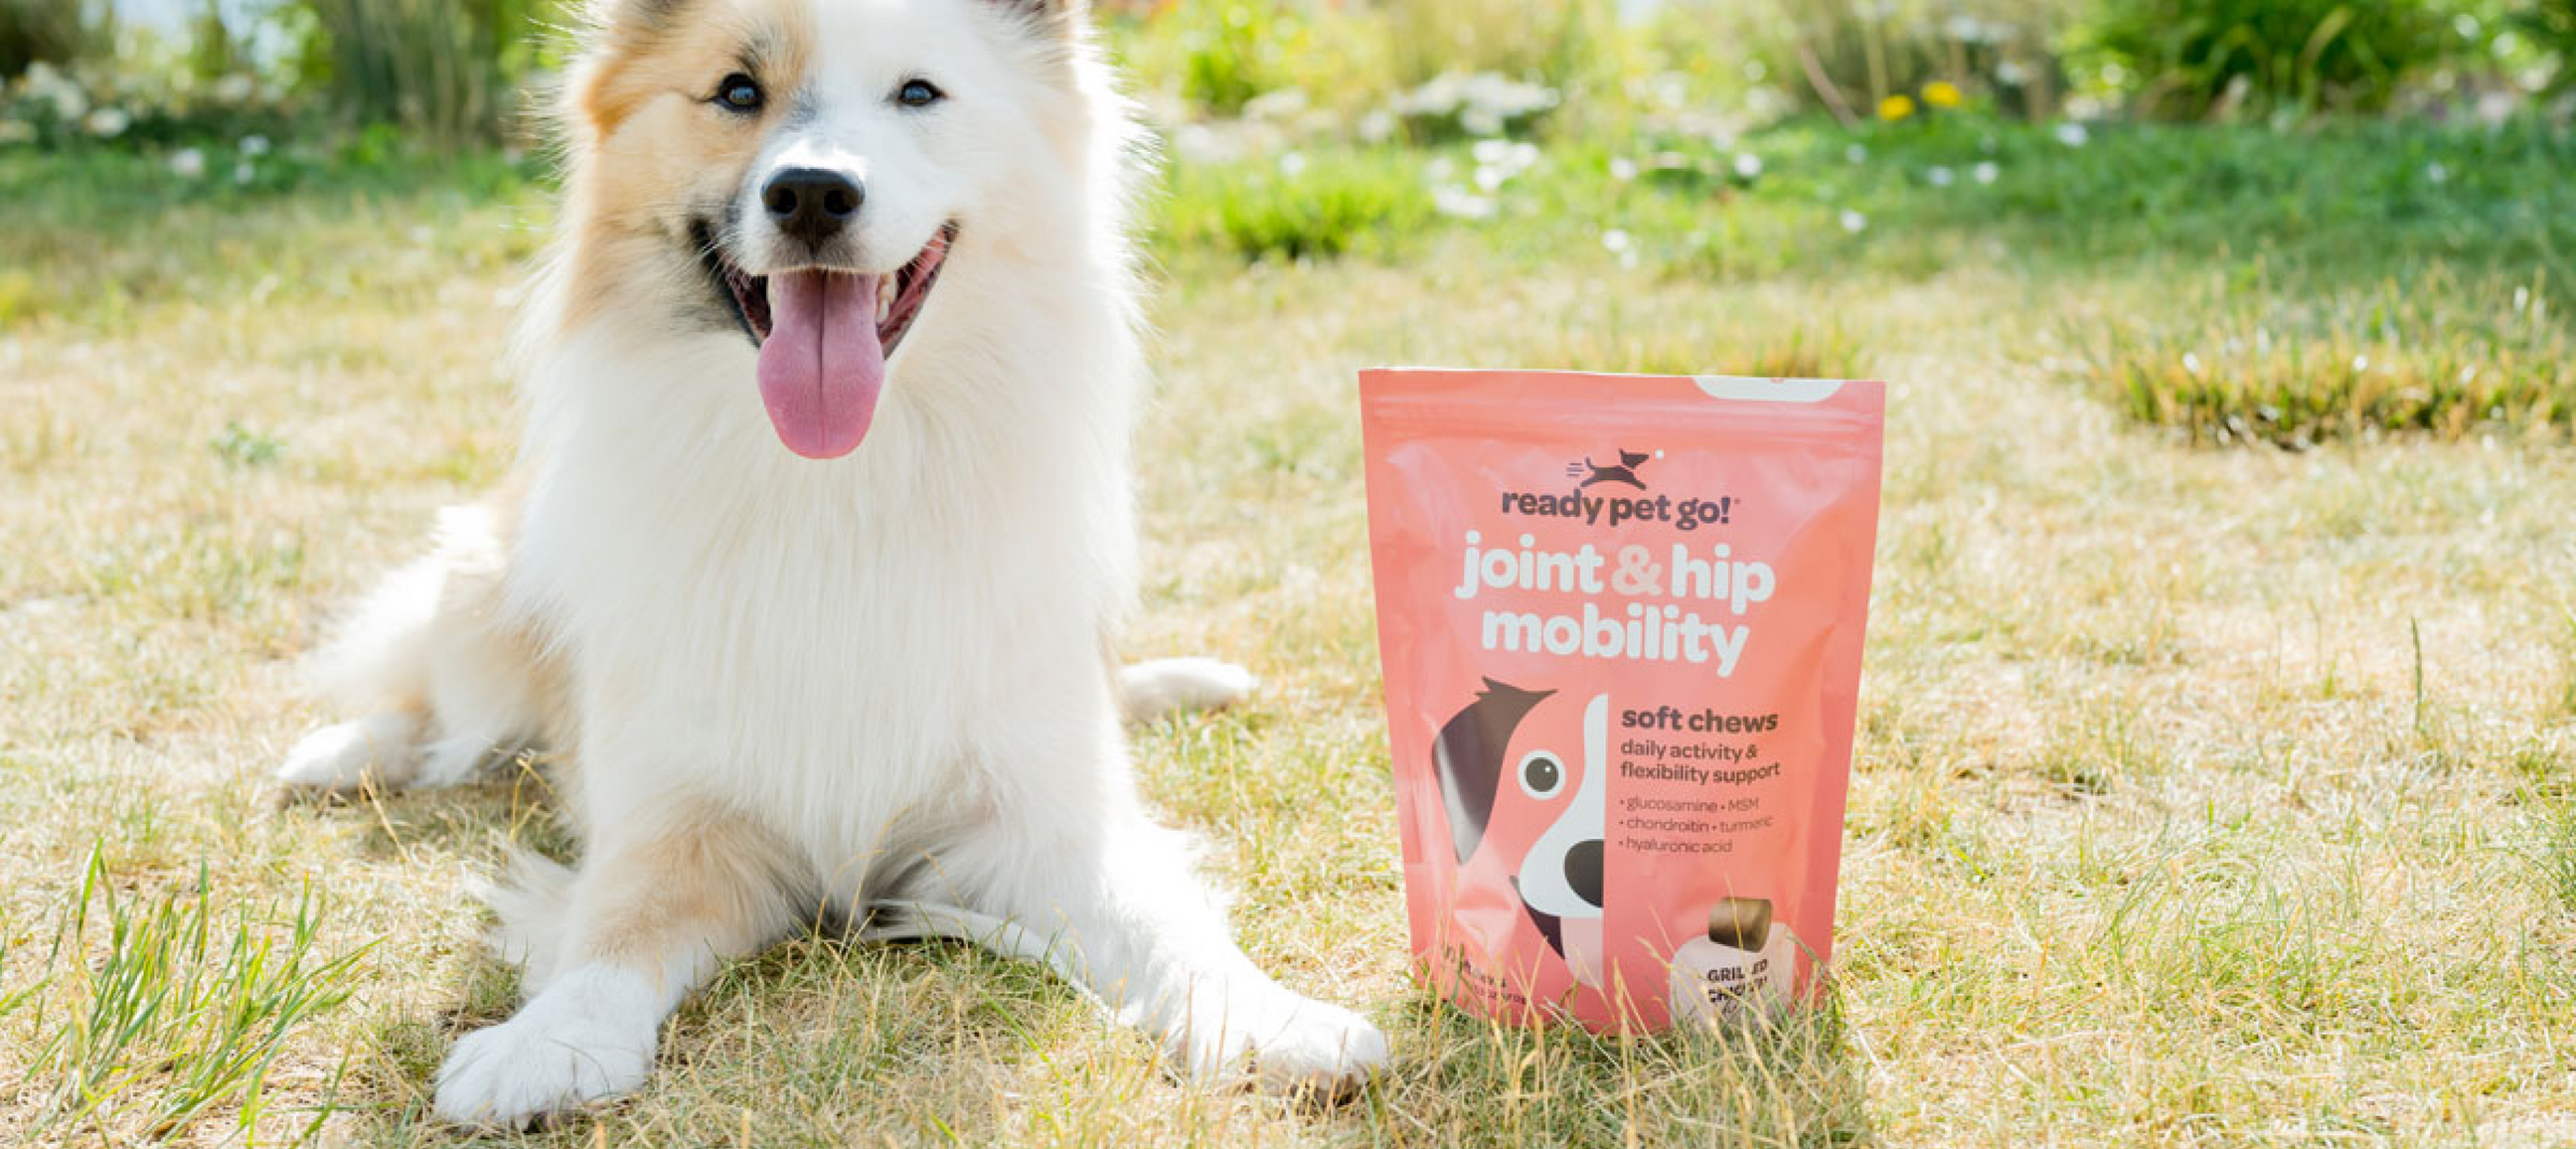 A dog alongside a bag of dog food from ready pet go! brand